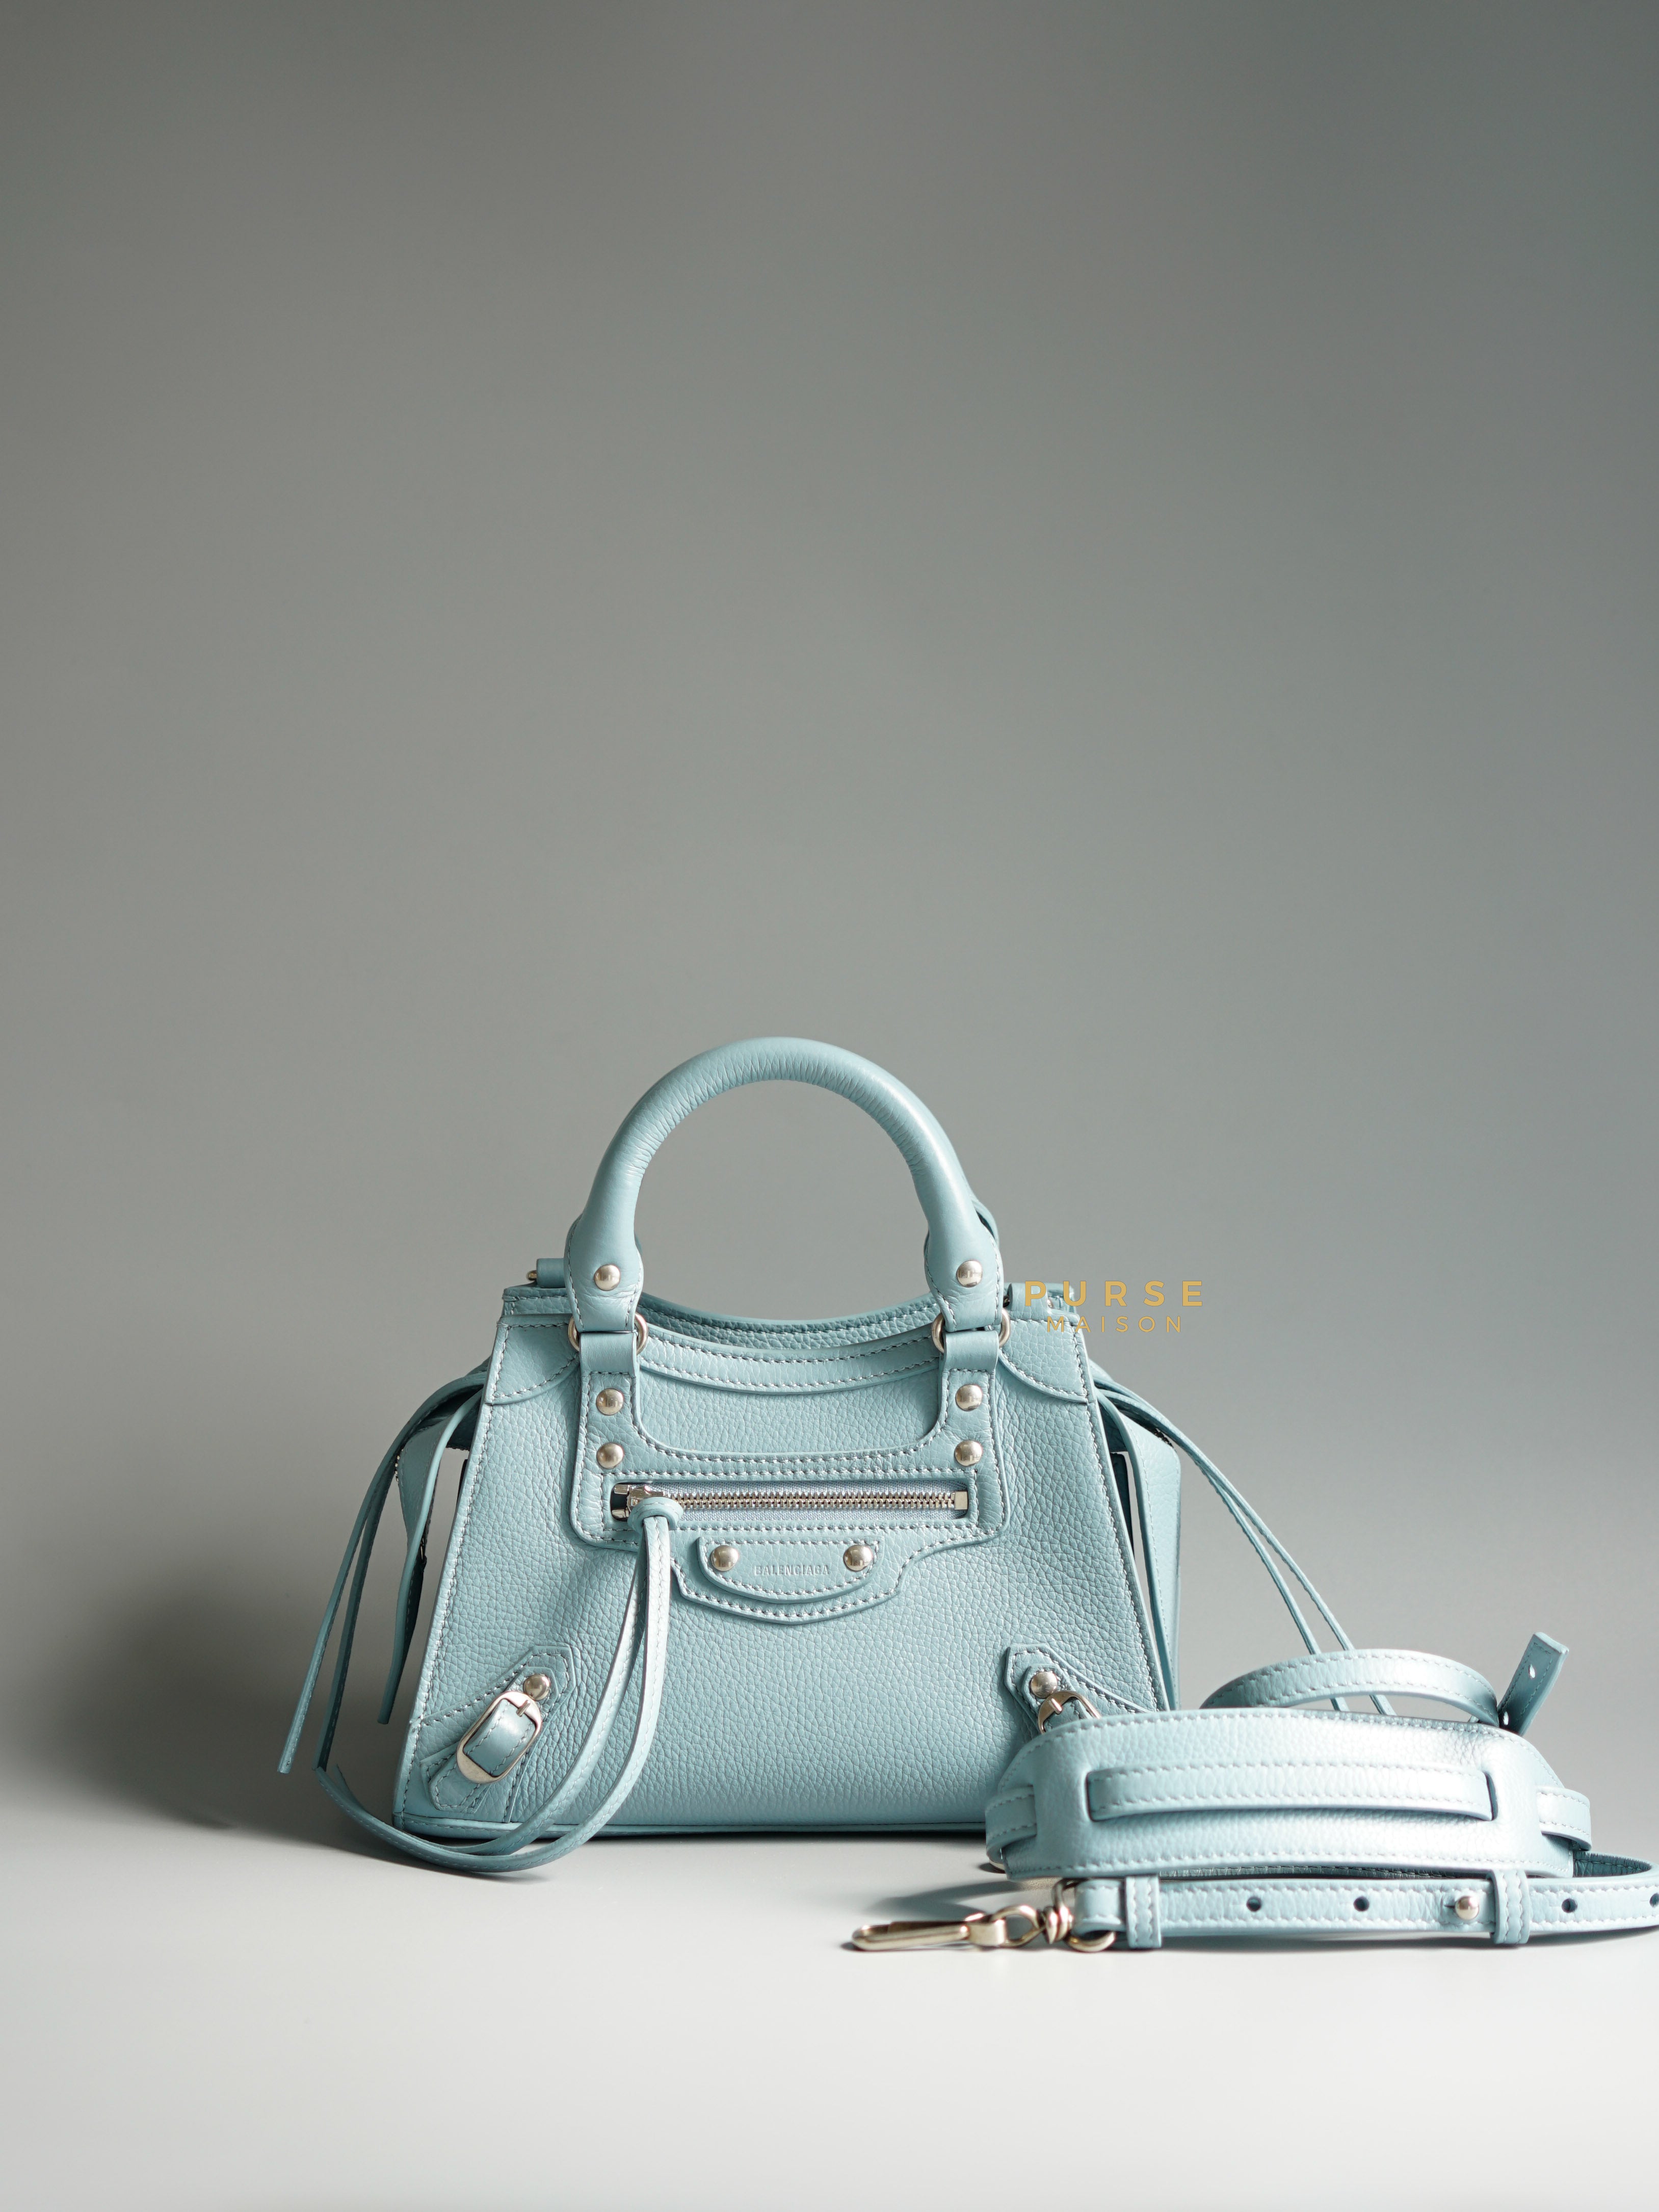 Balenciaga Mini Neo Classic in Light Blue and Silver Hardware | Purse Maison Luxury Bags Shop